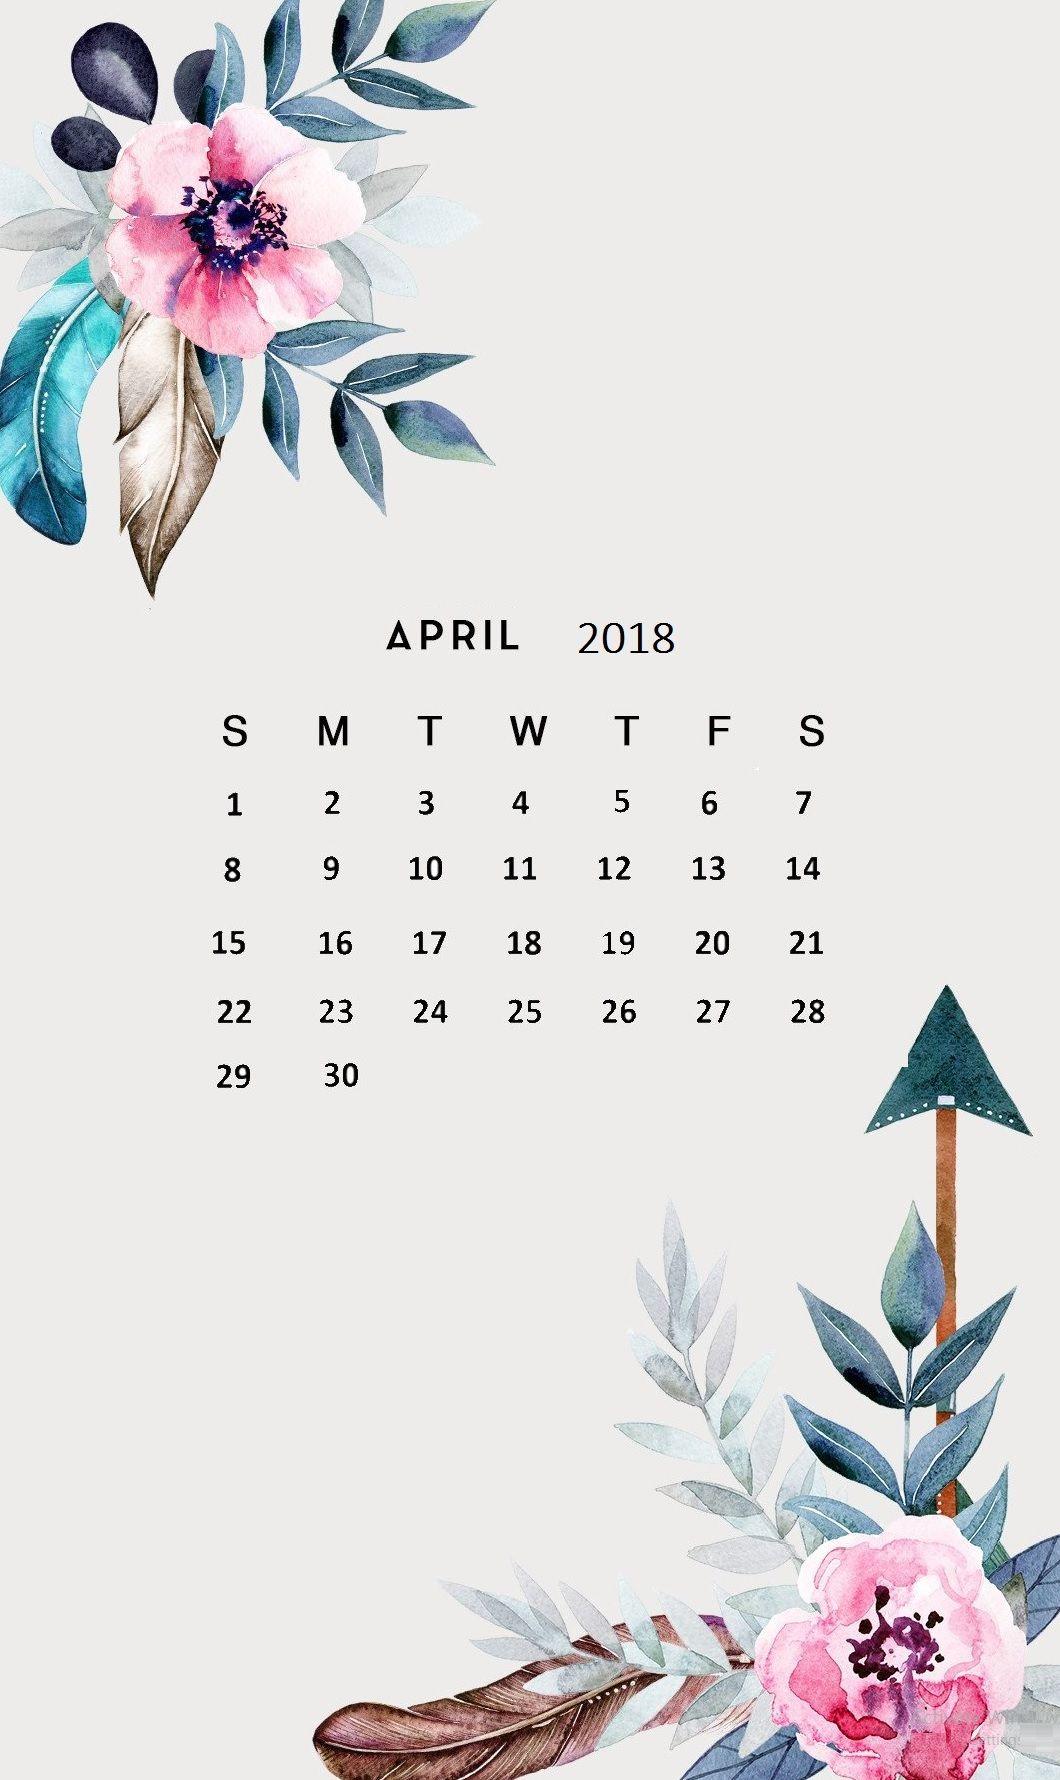 Amazing April 2018 Calendar Wallpaper. Calendar wallpaper